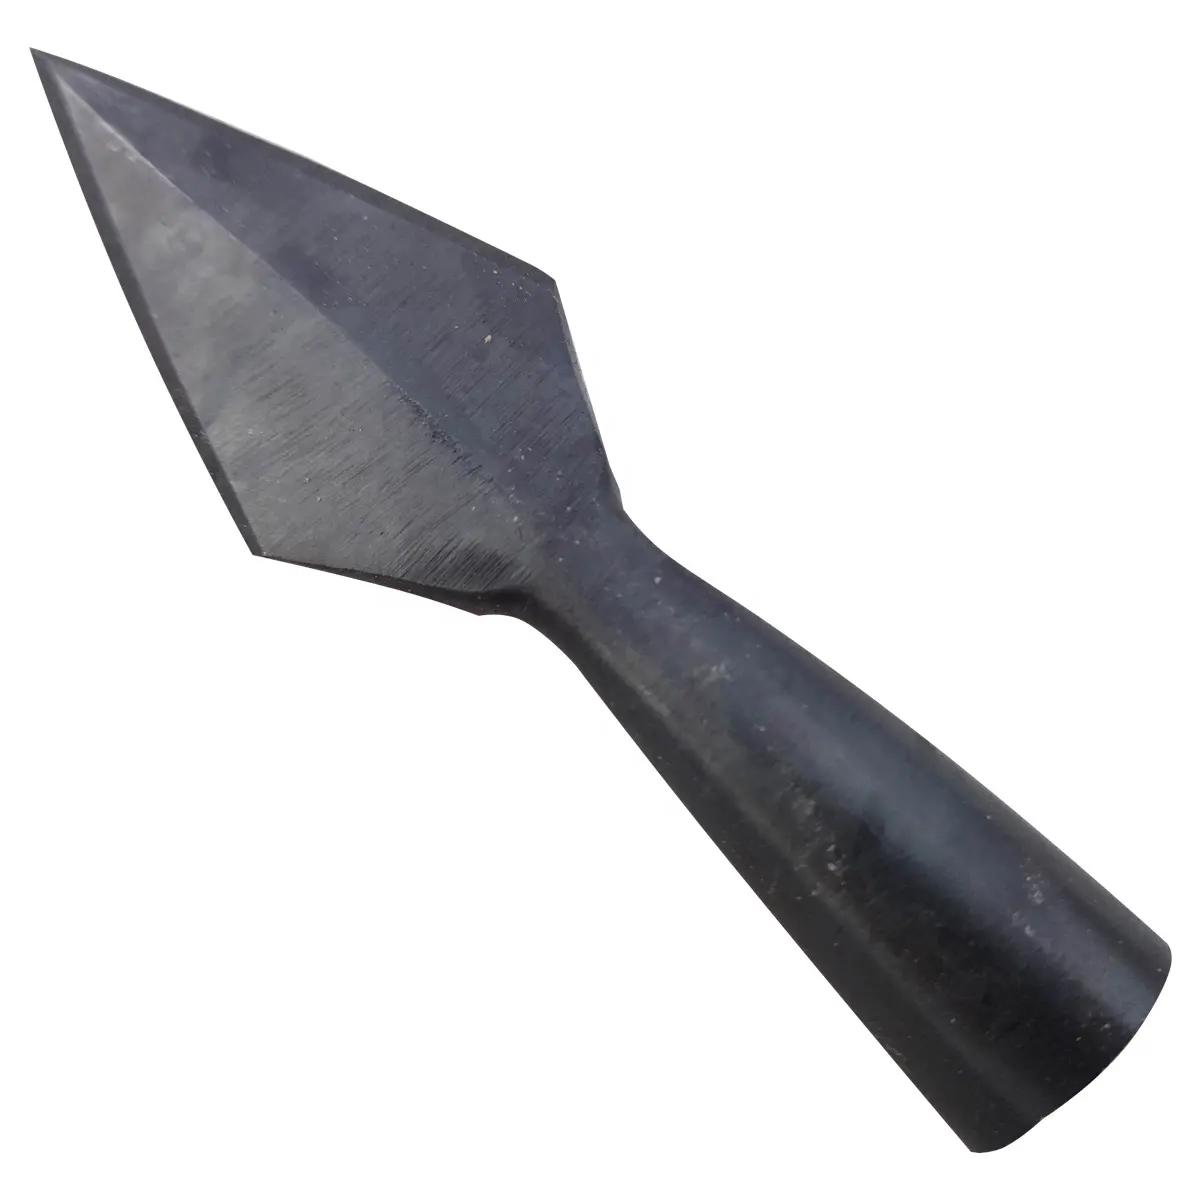 Historical Hand Forged Iron Rhombus Shaped Arrowhead Point Medieval Broadhead Bow Hunting Viking Spearhead Archery Supplies